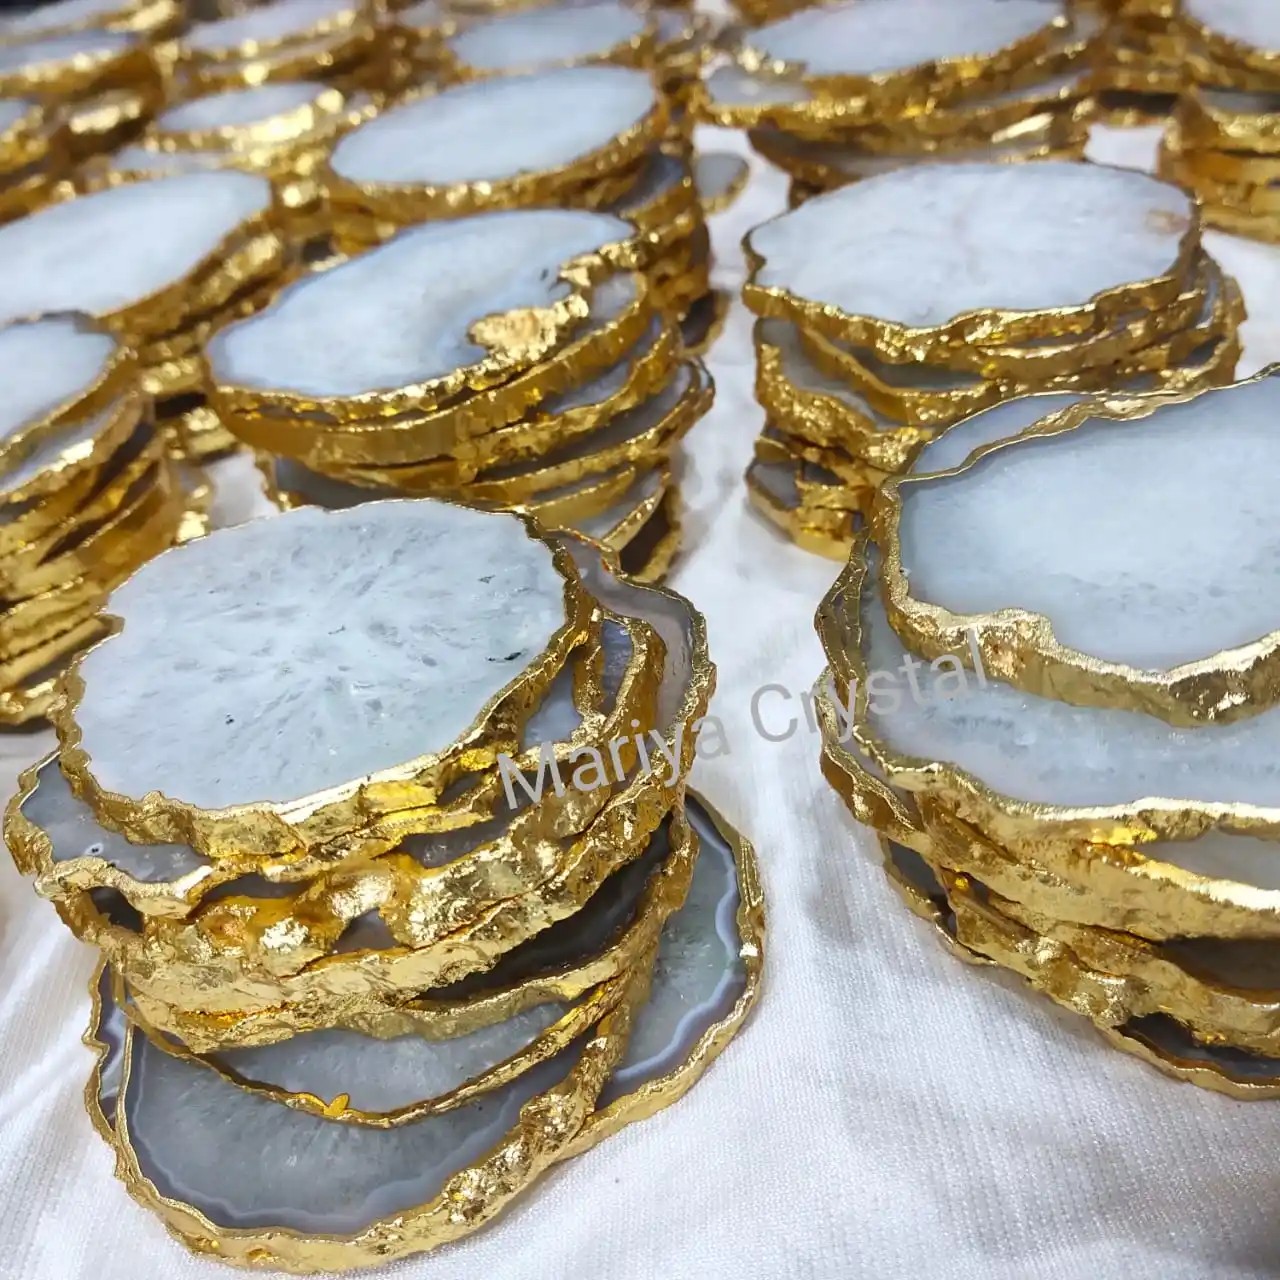 Sllice ถาดรองแก้วเกลืออาเกตสีขาวขอบทอง,ที่รองแก้วหินอาเกตเกลือขายส่งขอบทองคำฮวงจุ้ย